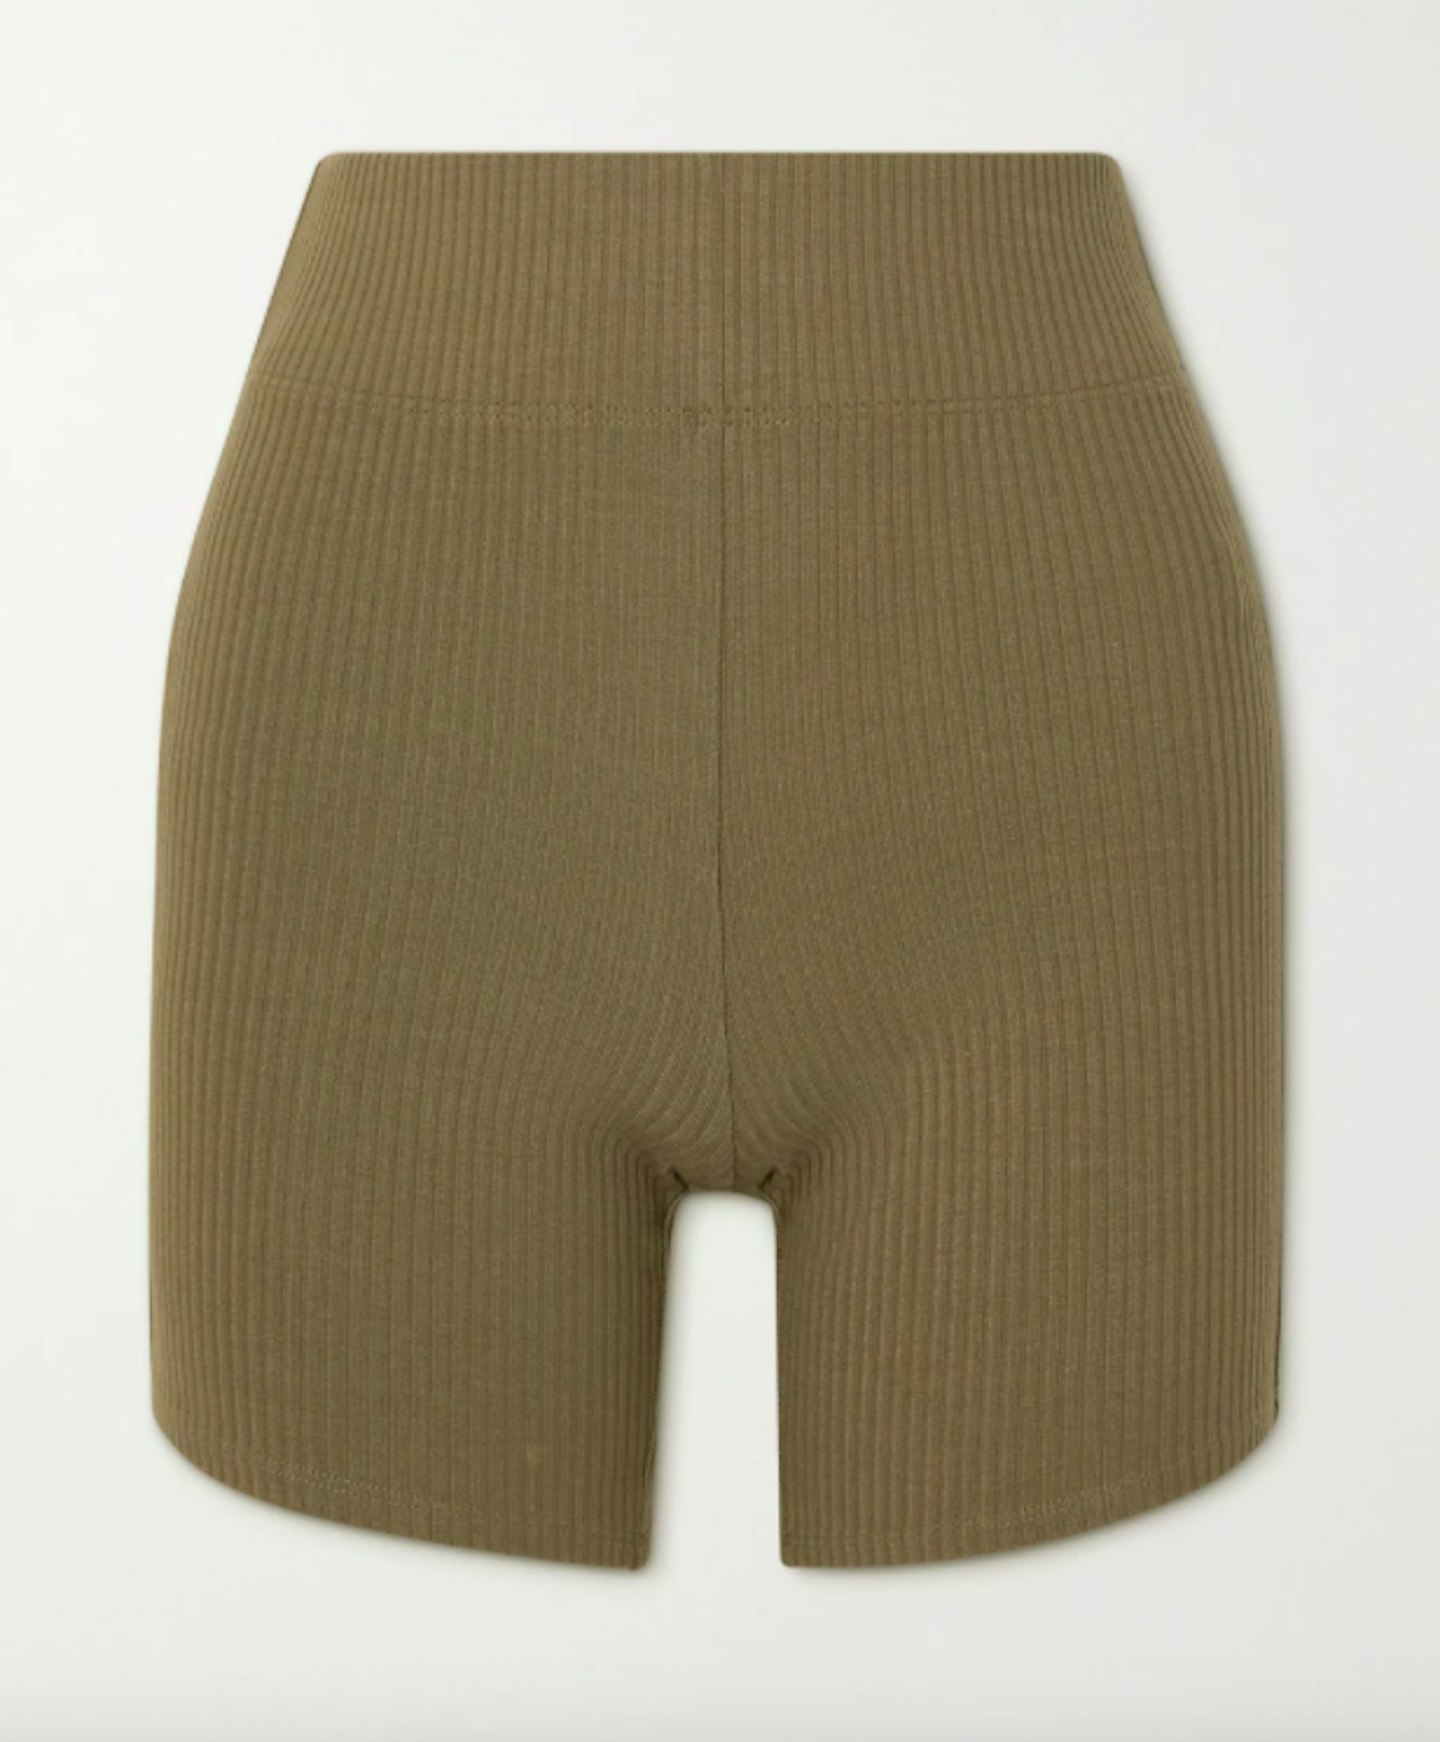 Leset, Ali Ribbed Stretch-Knit Shorts, £63